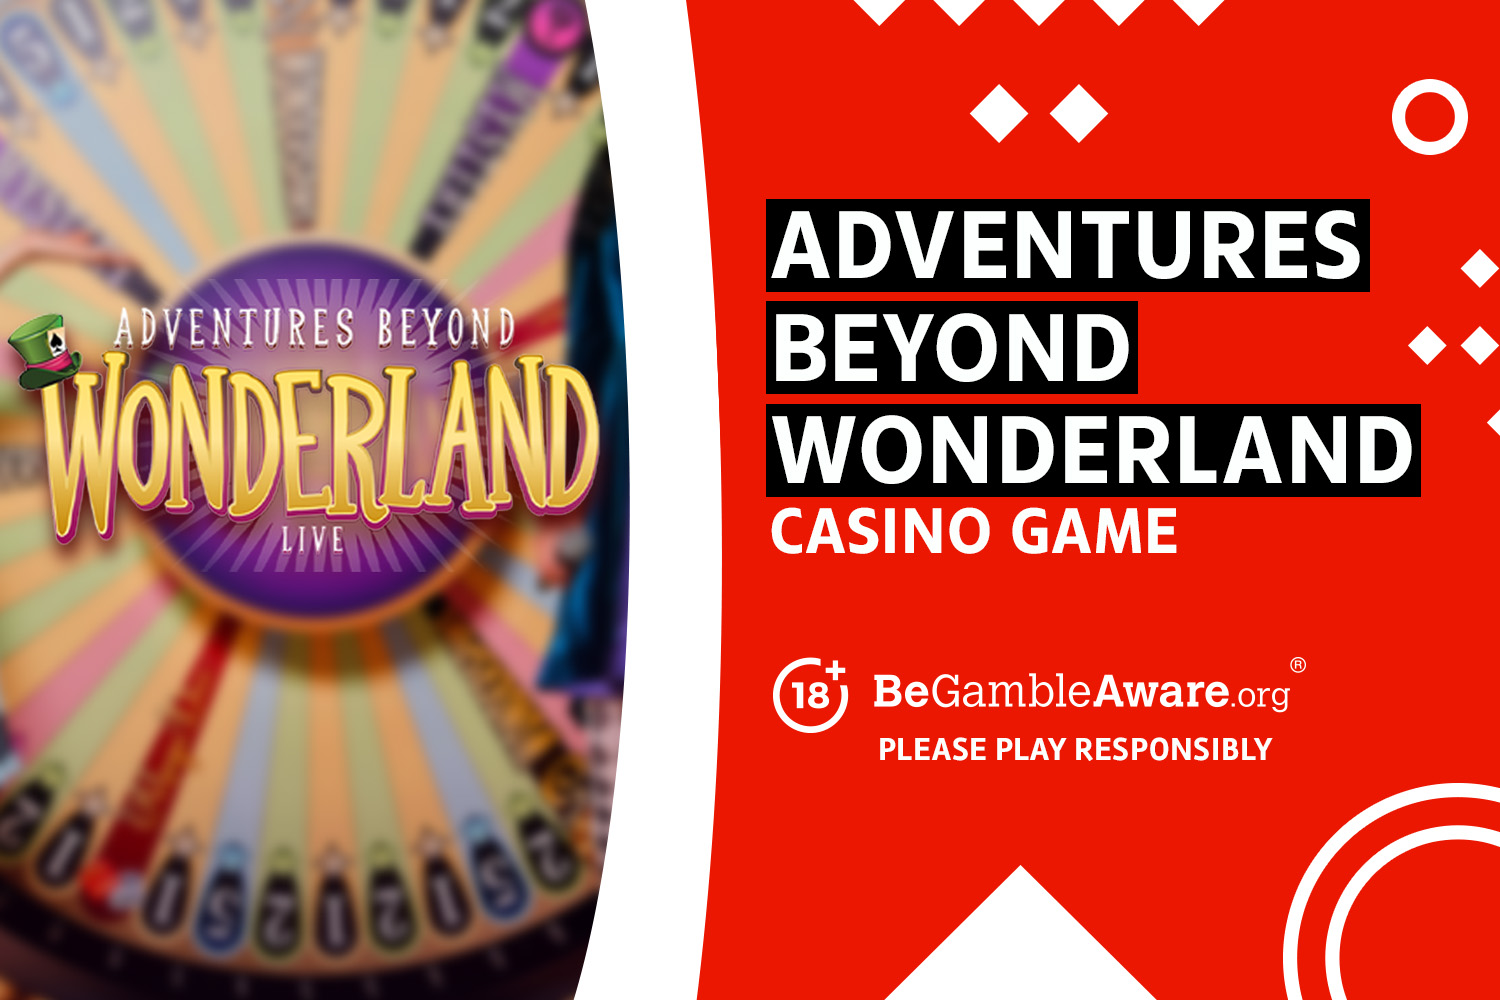 Adventures Beyond Wonderland casino game. 18+ BeGambleAware.org Please play responsibly.